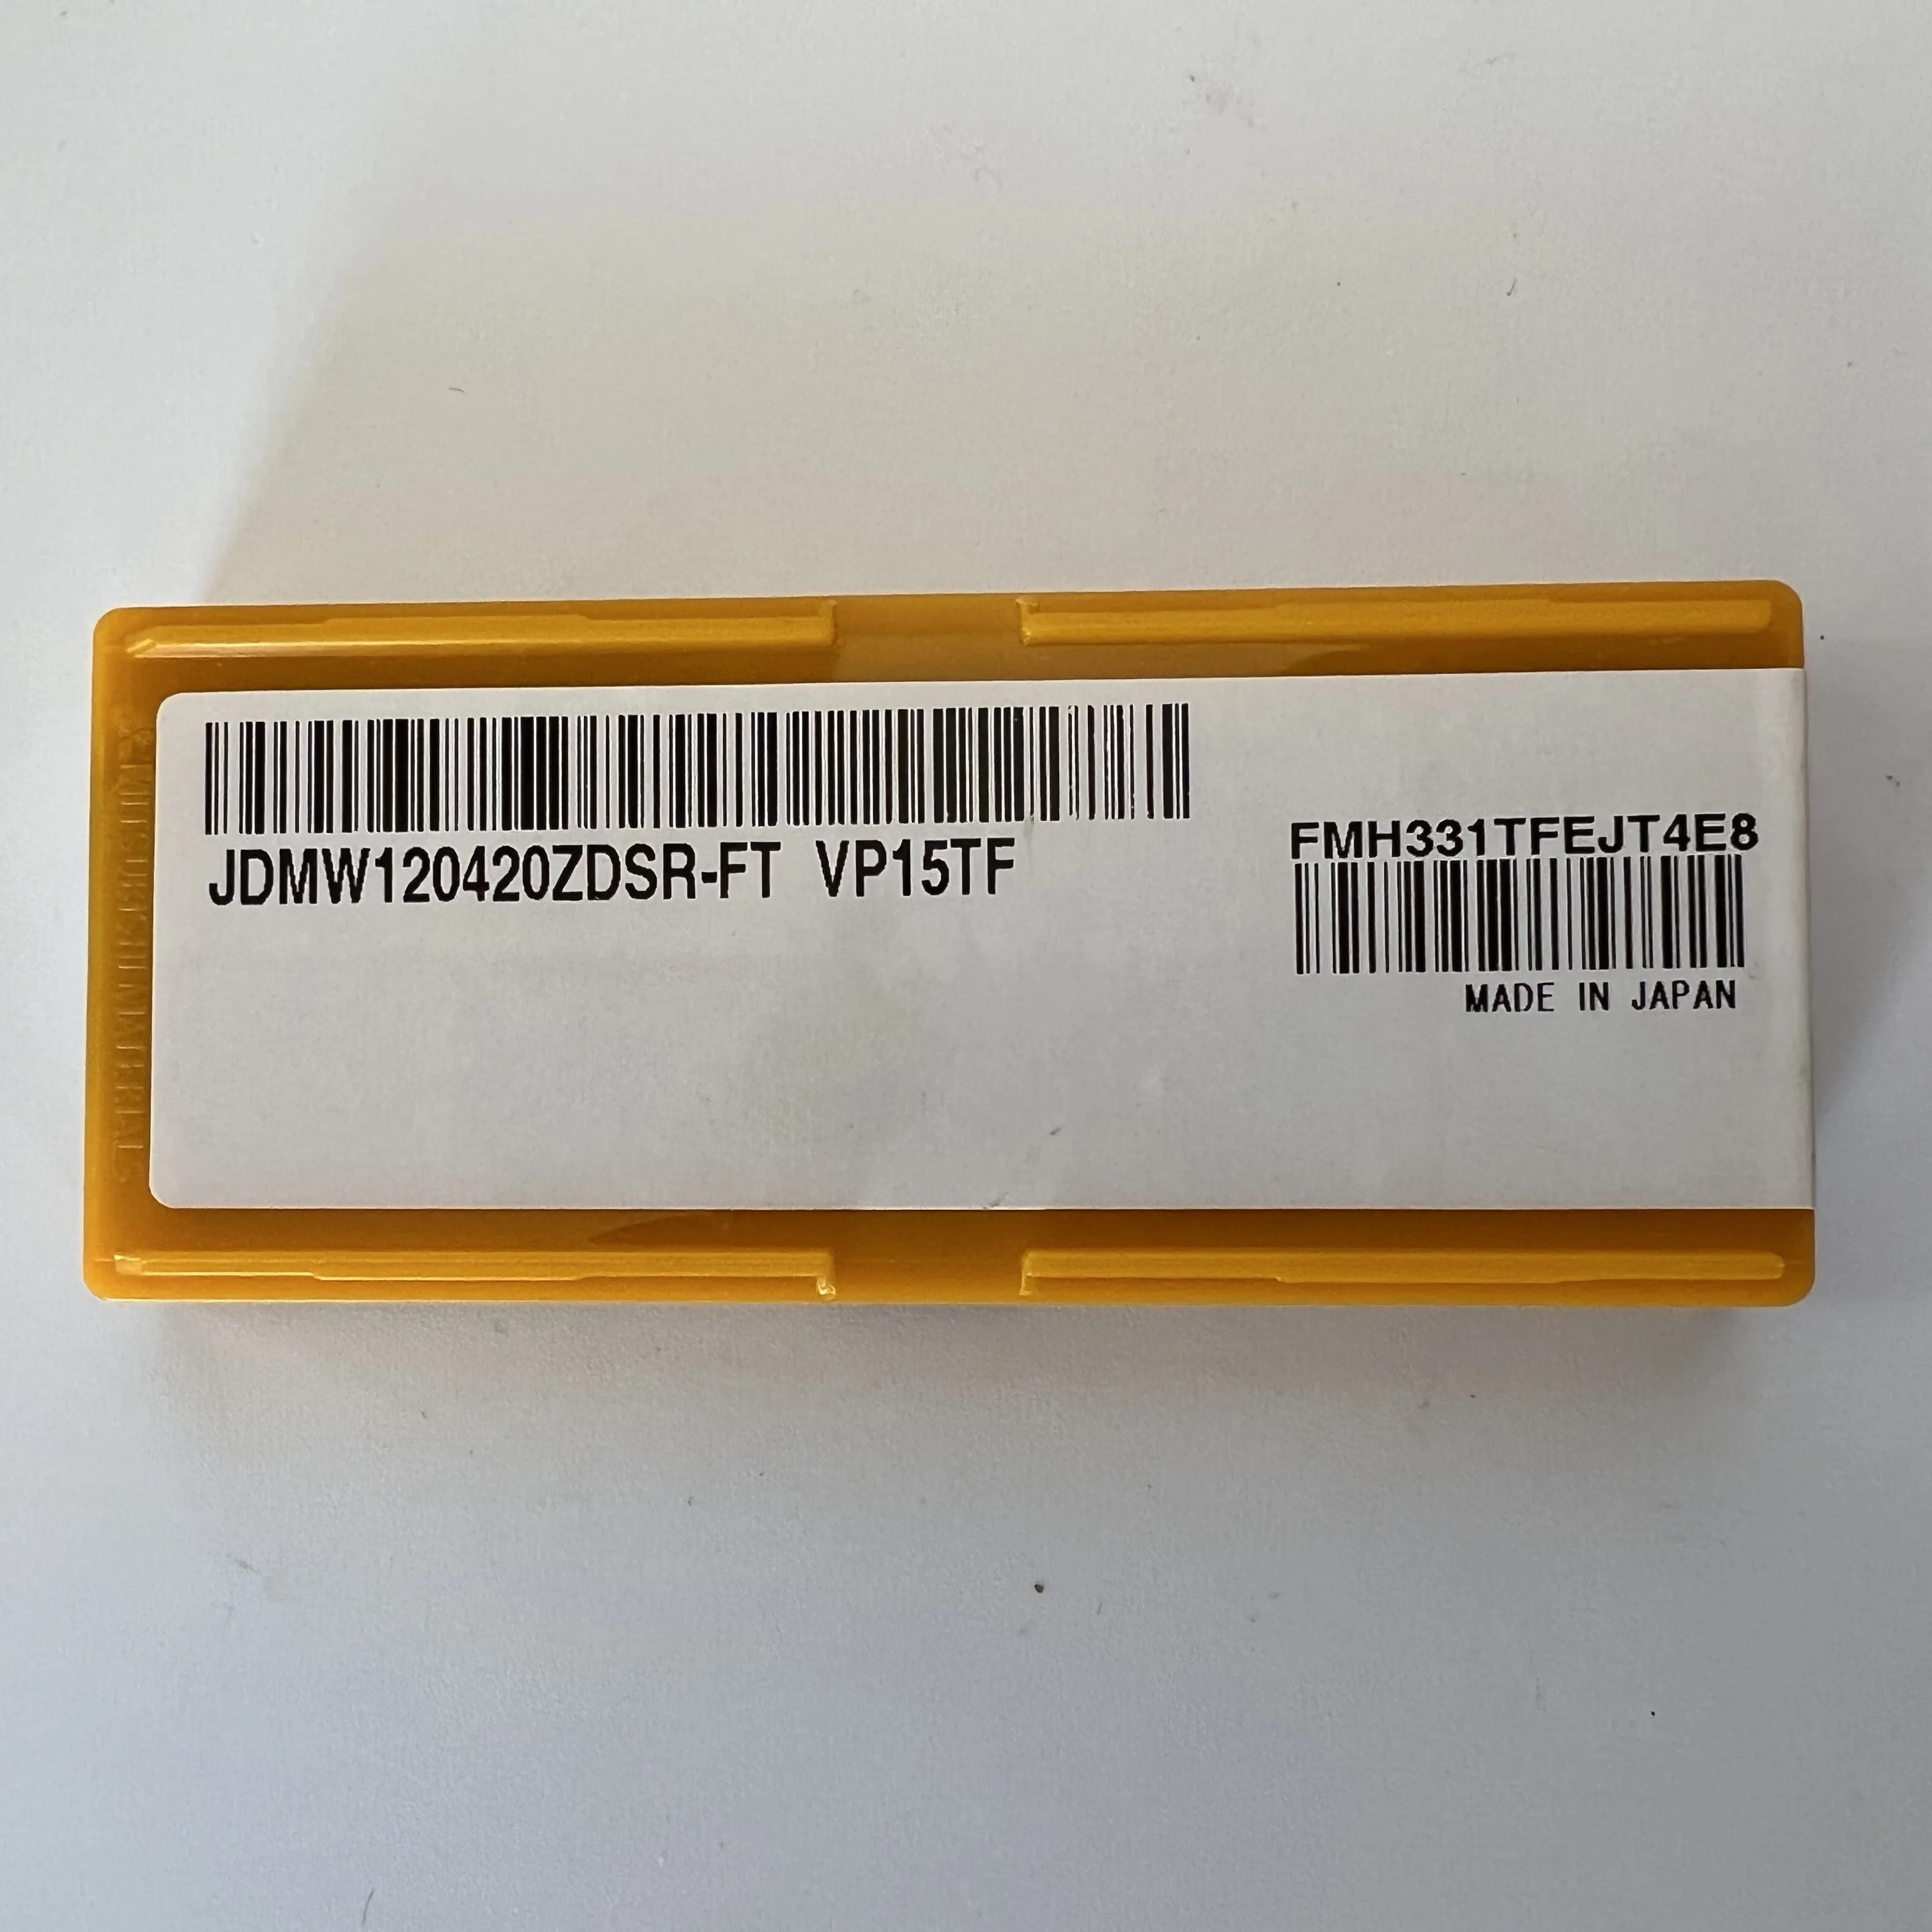 

JDMW120420ZDSR-FT VP15TF Original CNC blade